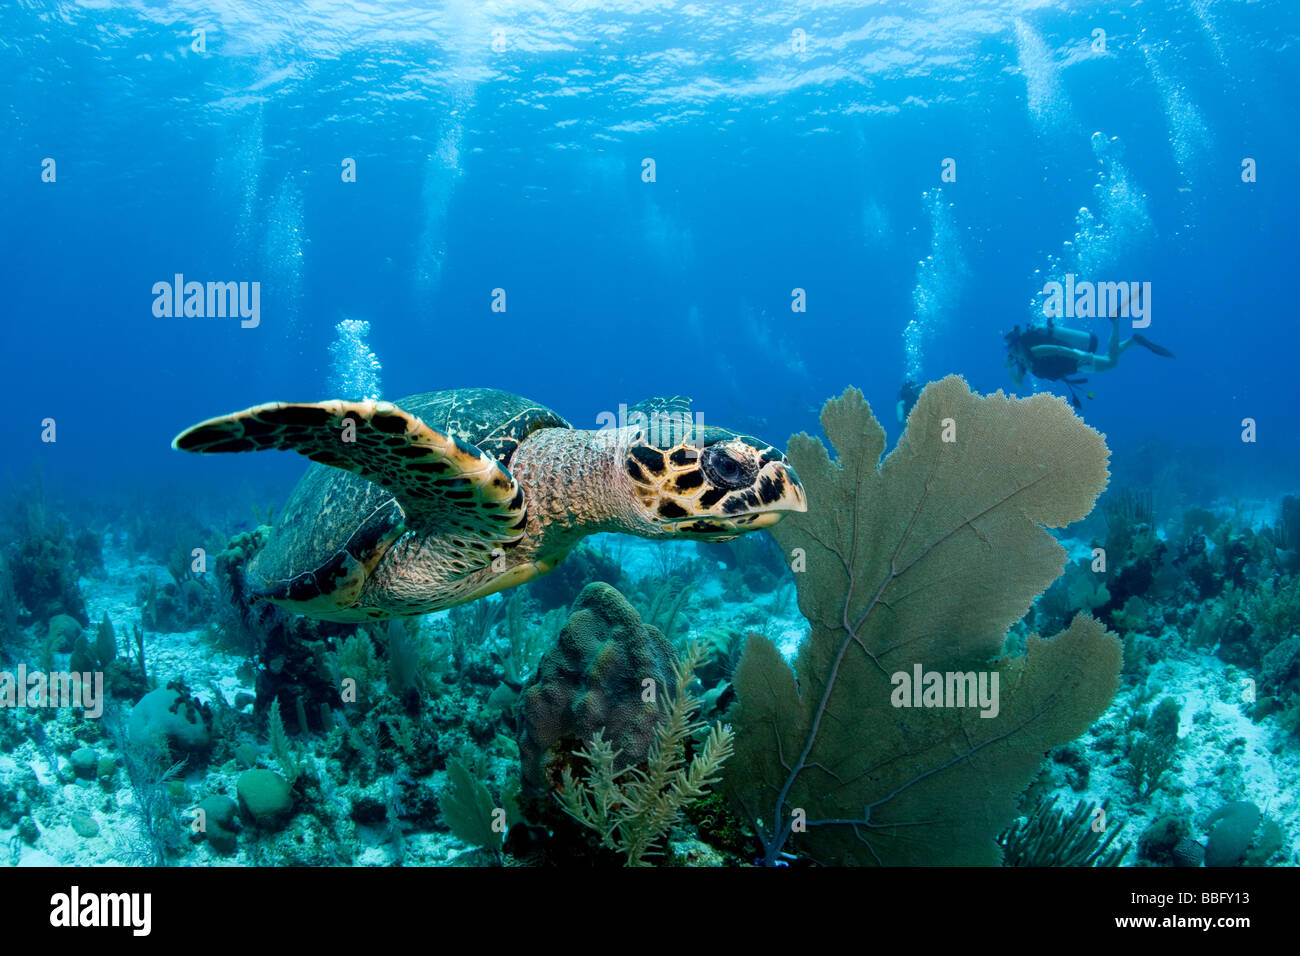 Hawksbill turtle on reef. Stock Photo